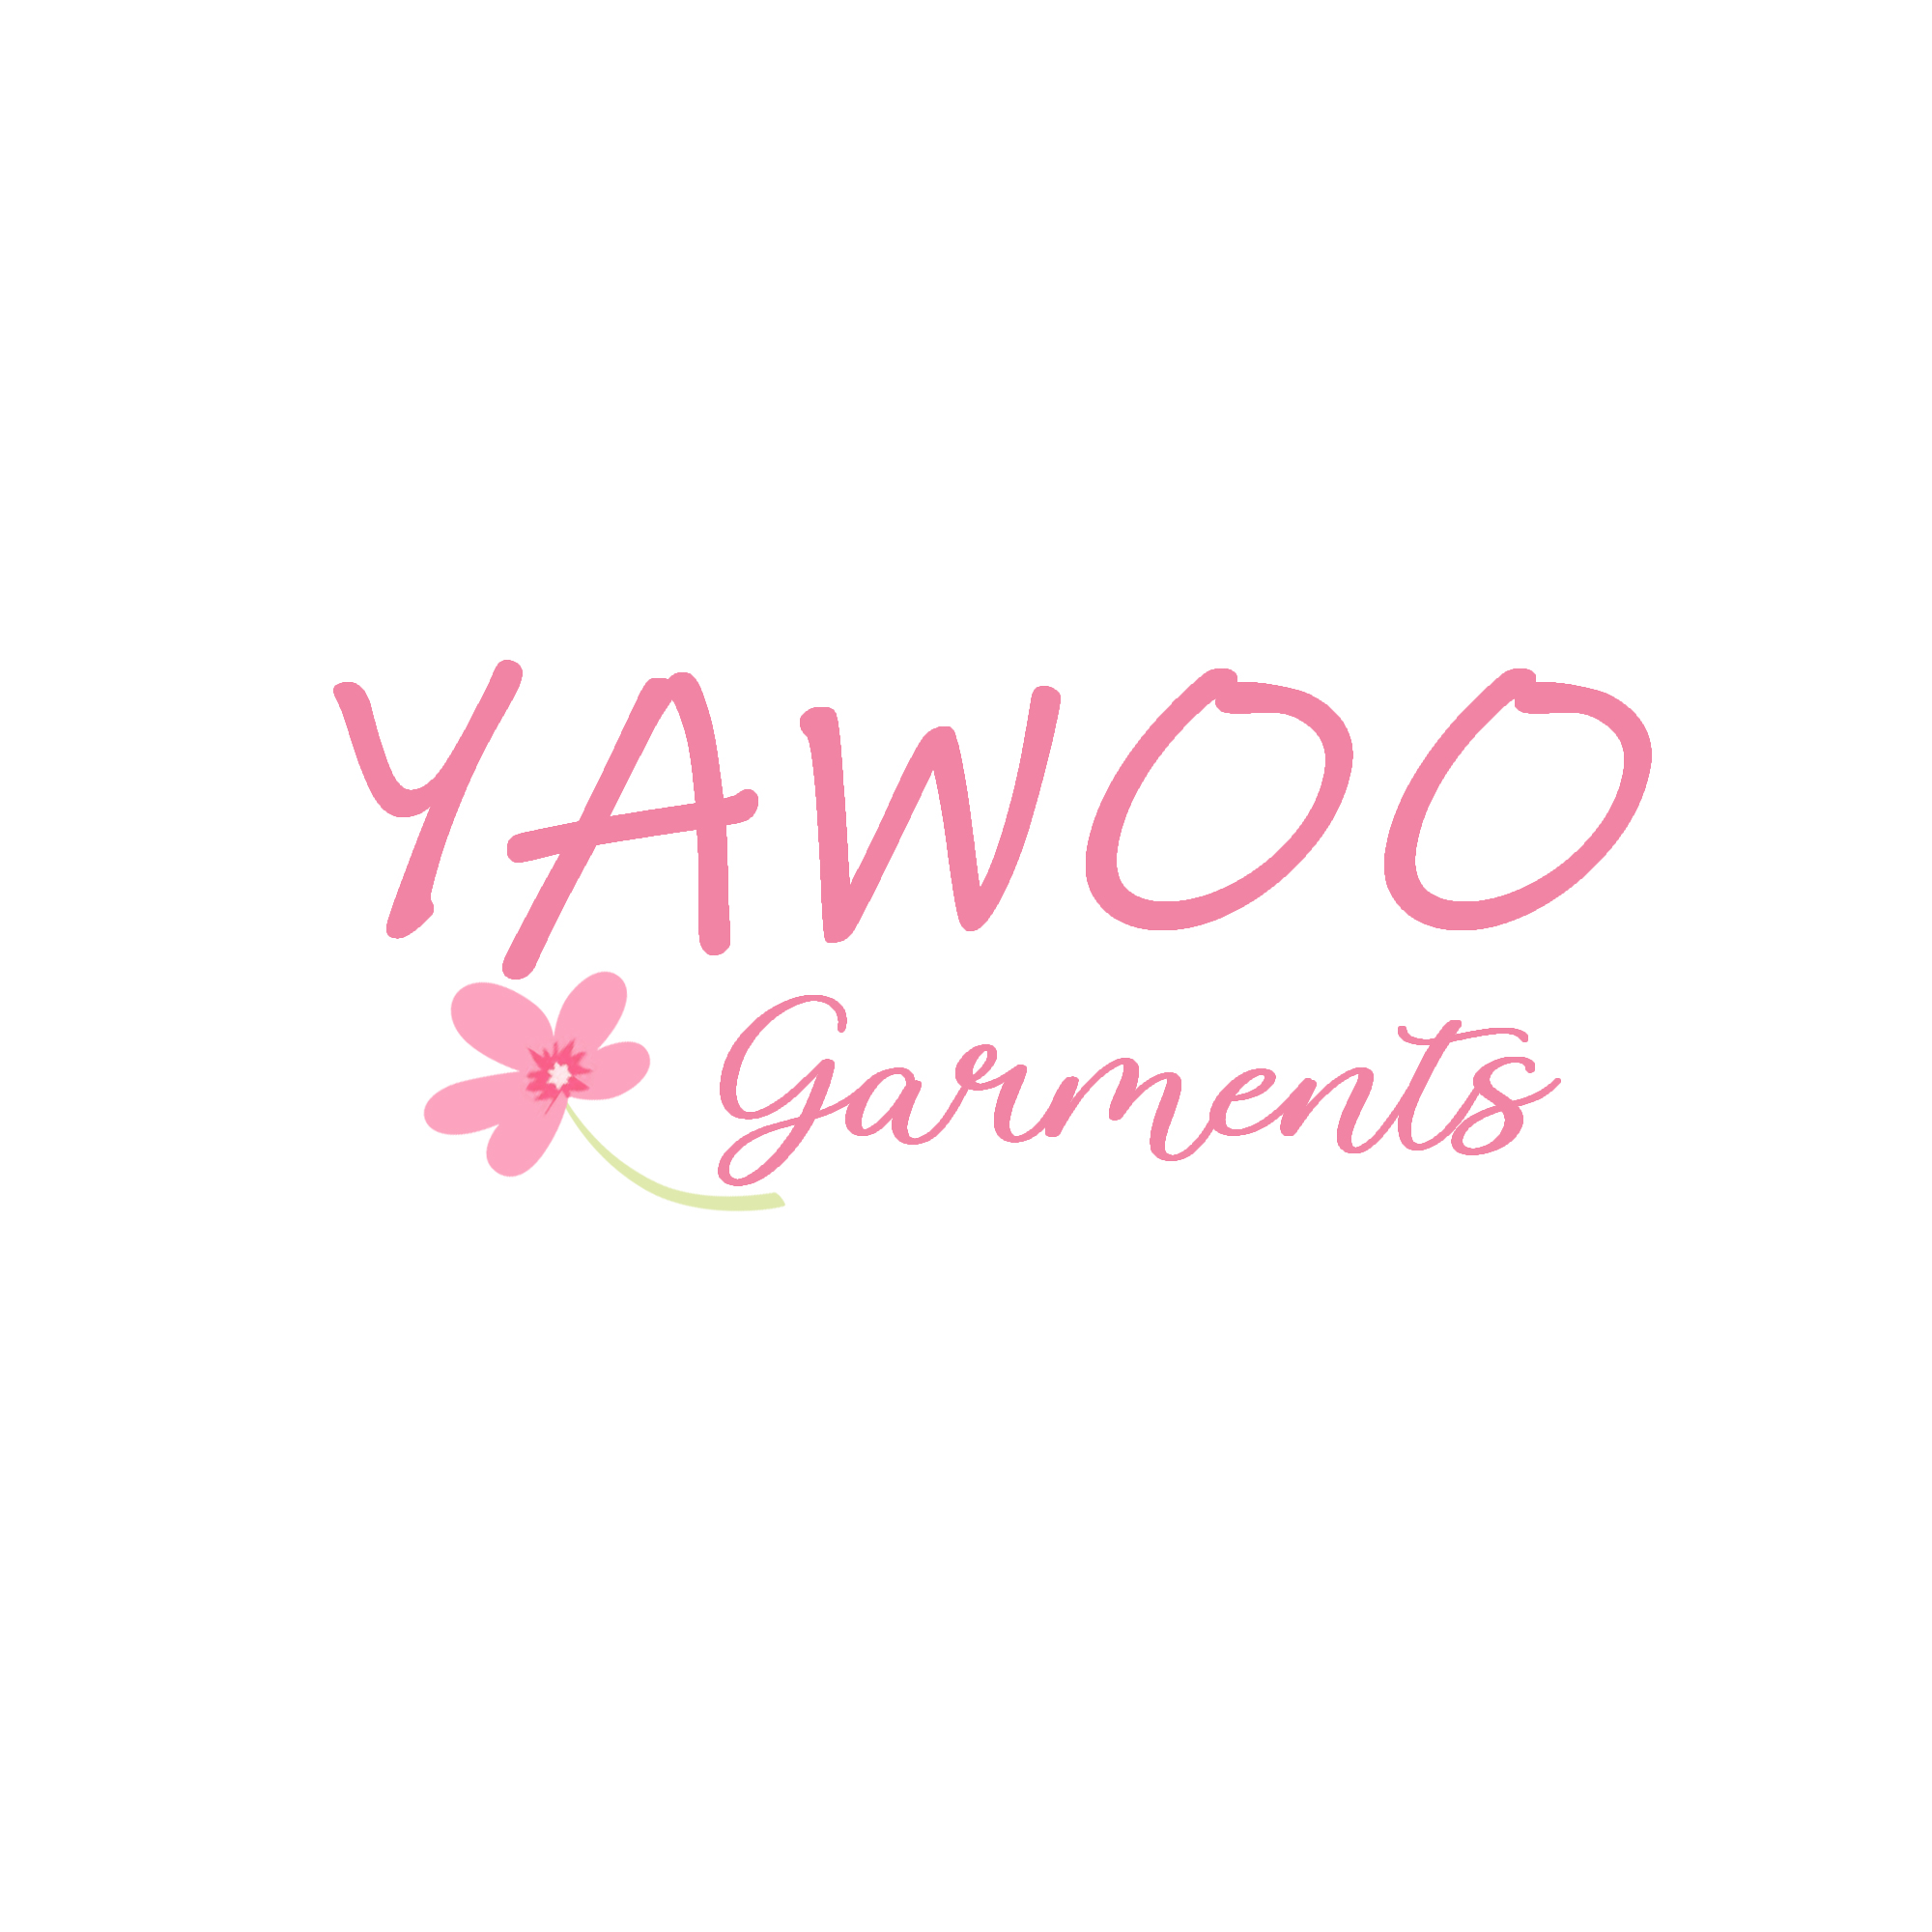 Yawoo Garments